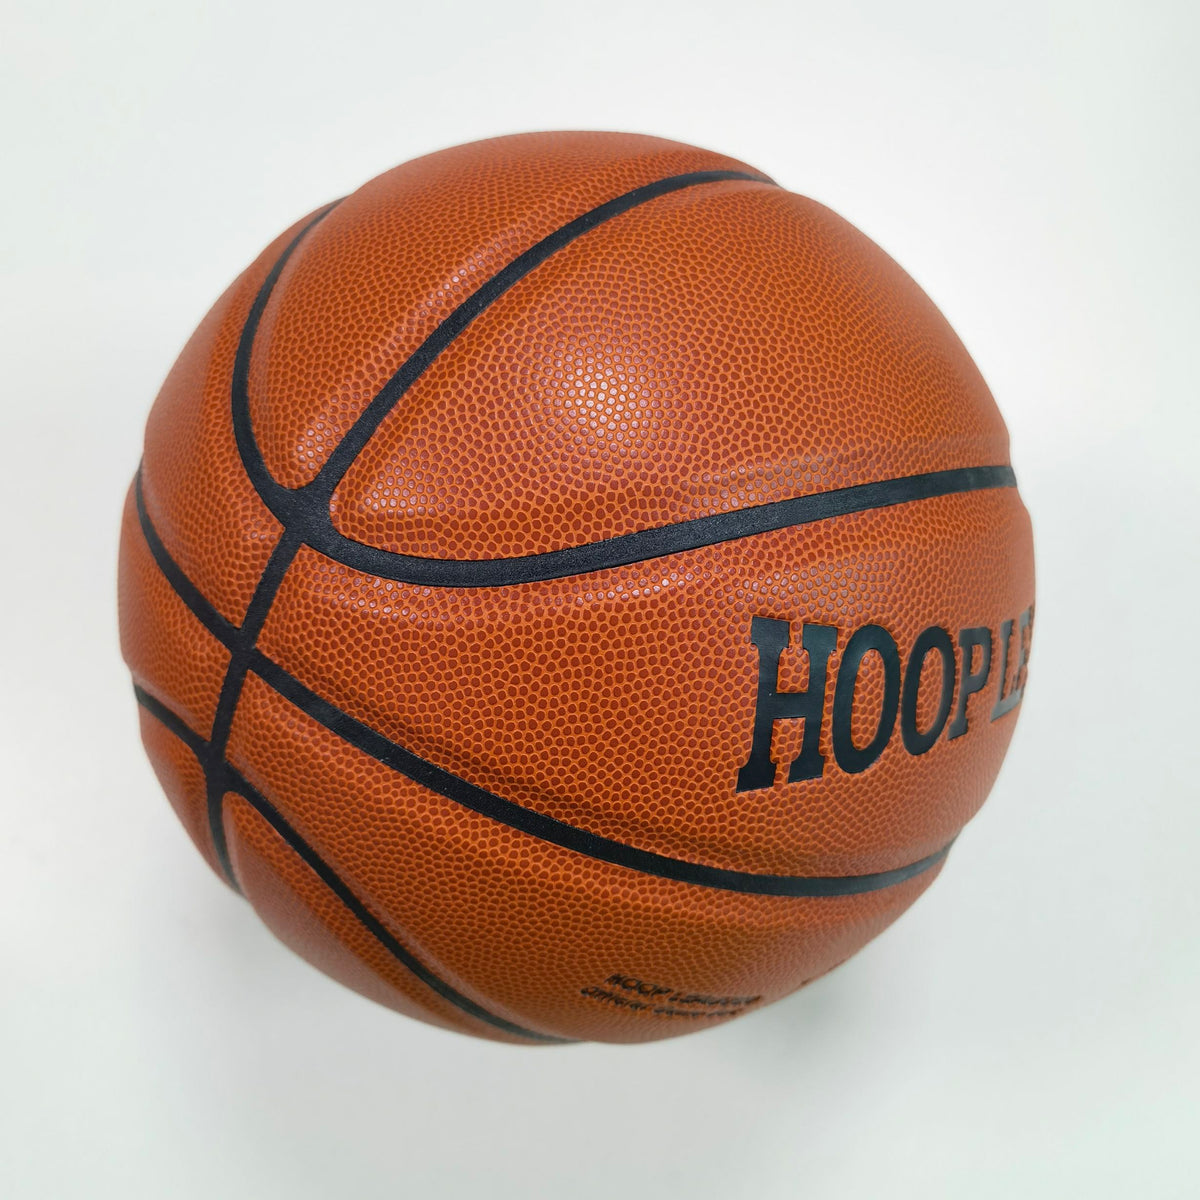 Hoop League Microfiber Leather Indoor Game Basketball 